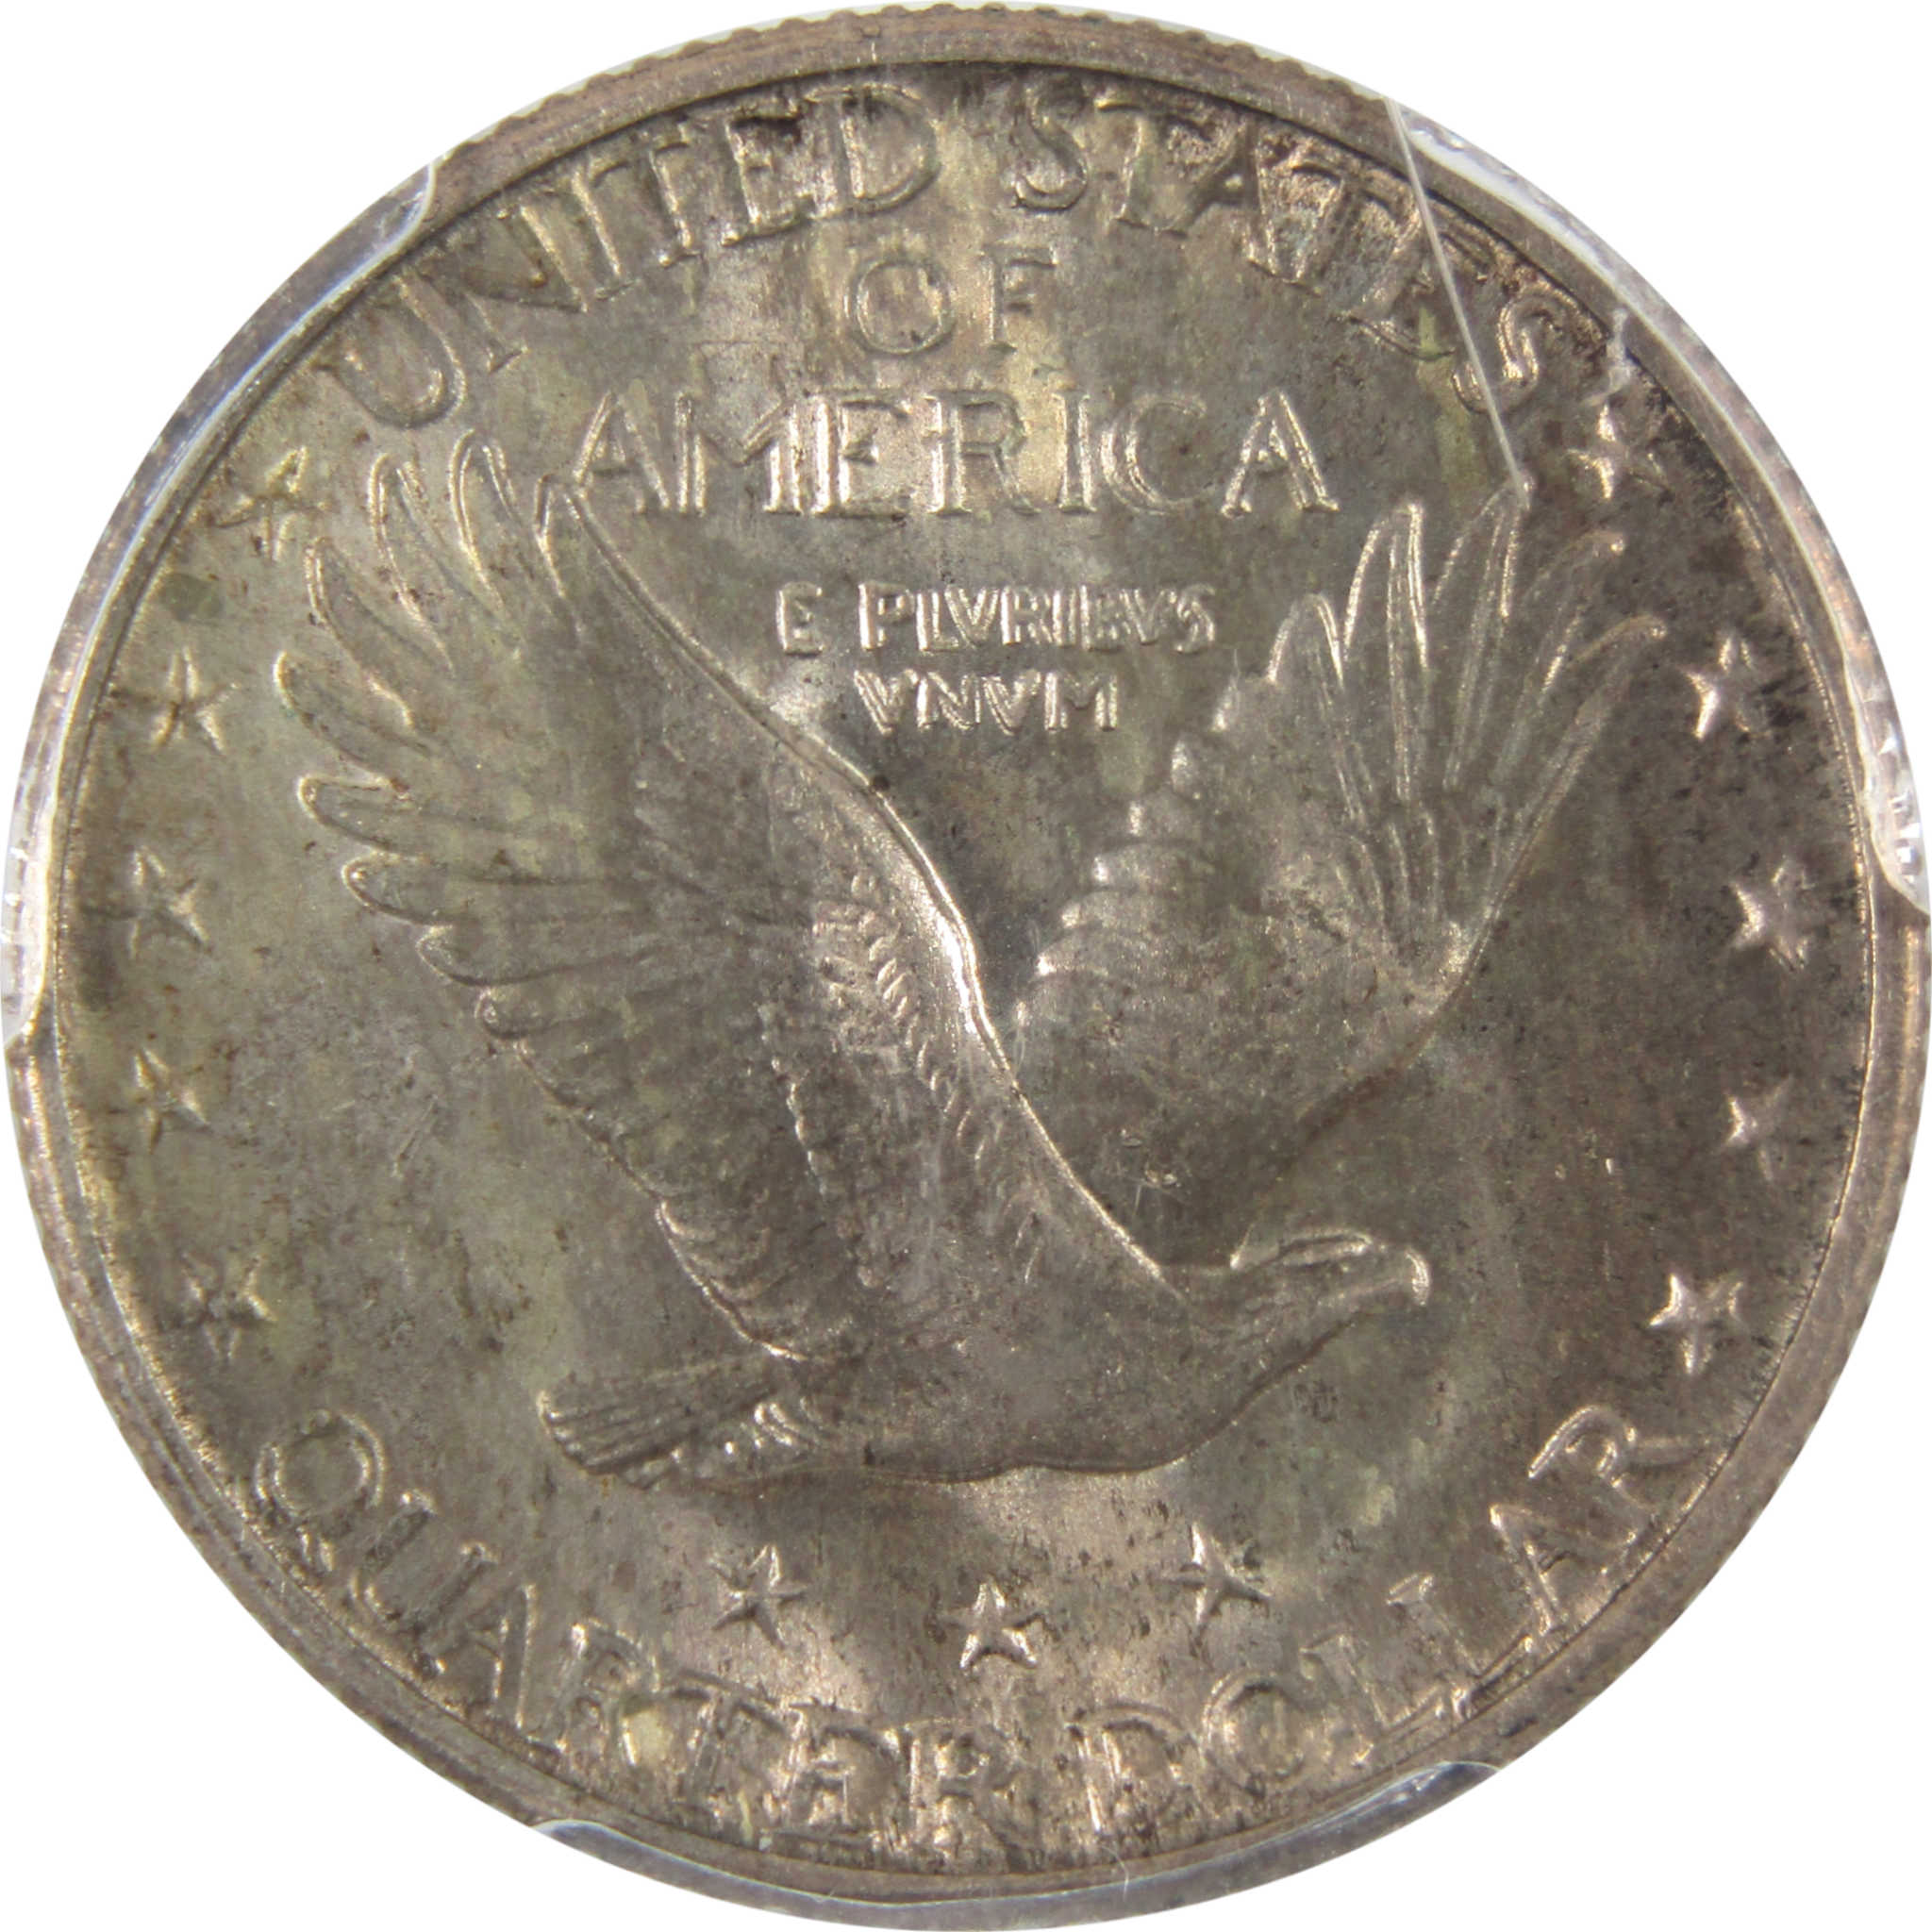 1930 Standing Liberty Quarter MS 64 PCGS 90% Silver 25c Unc SKU:I8720